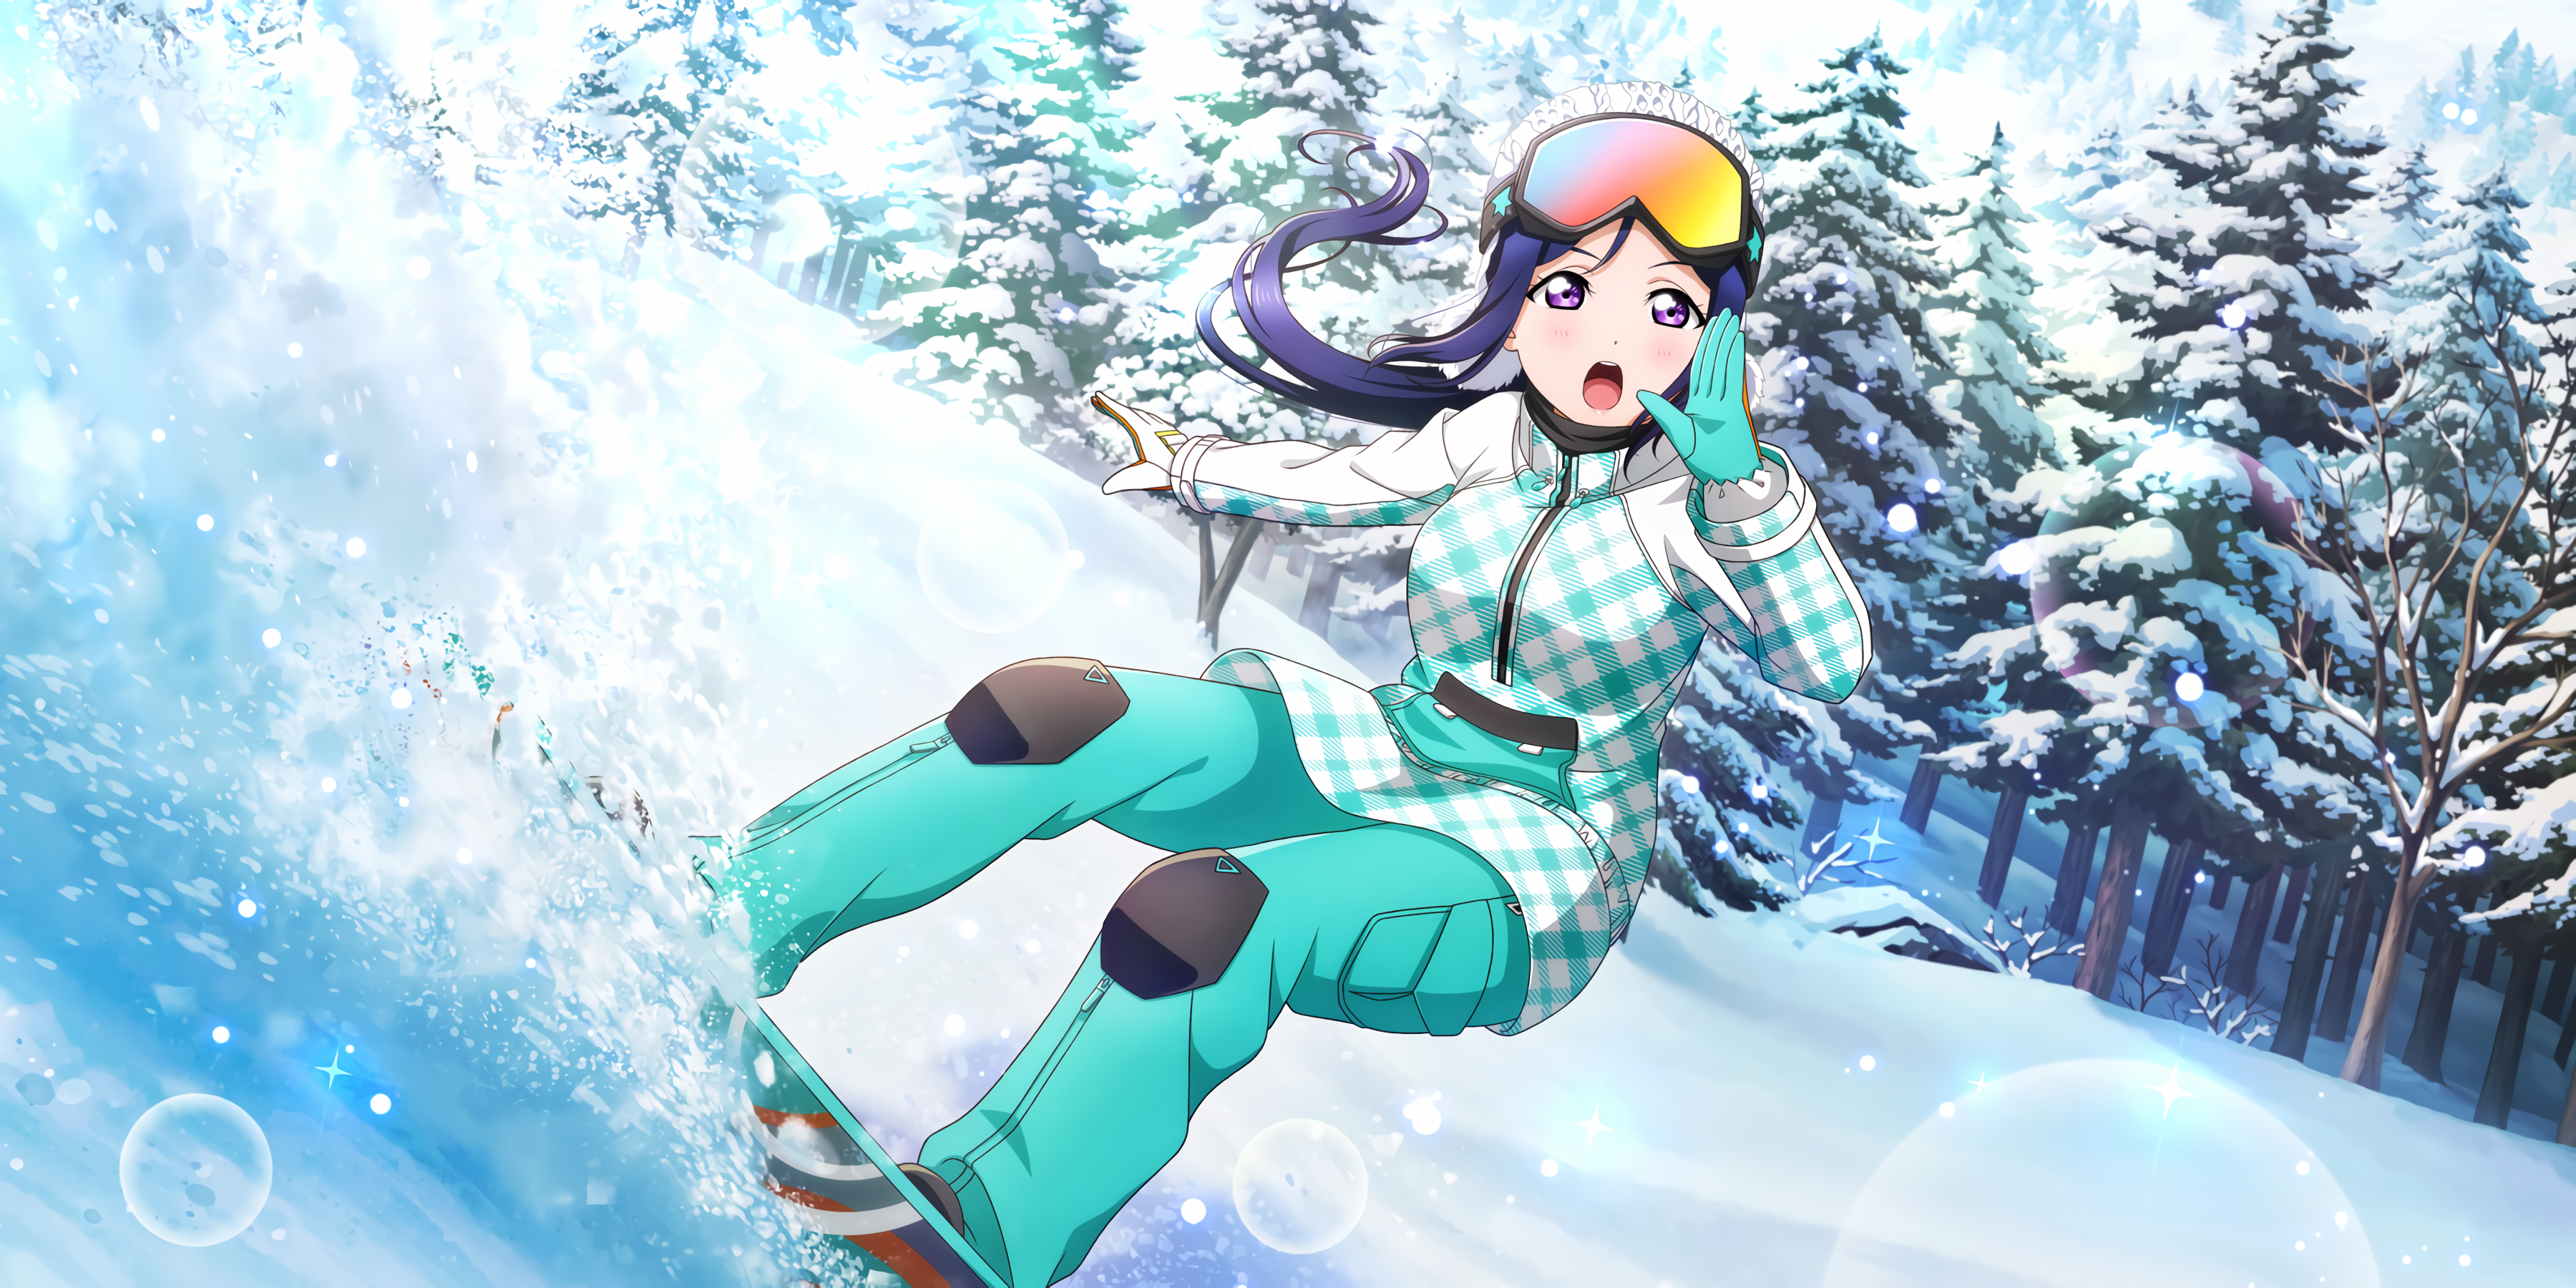 Anime Snowboarding Boy